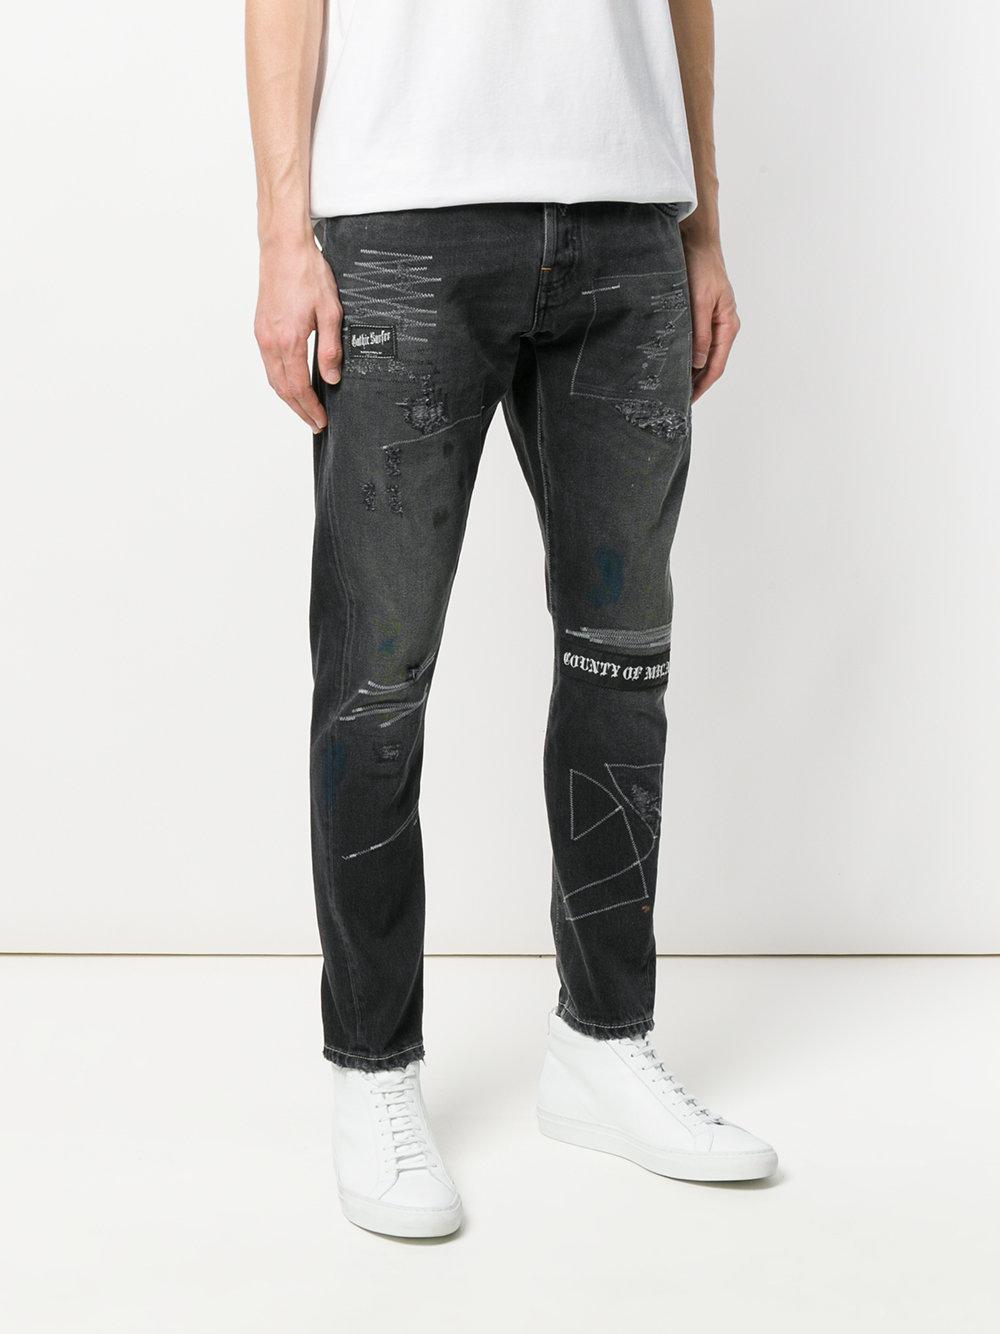 Marcelo Burlon Denim Gothic Surfer Jeans in Grey (Grey) for Men - Lyst